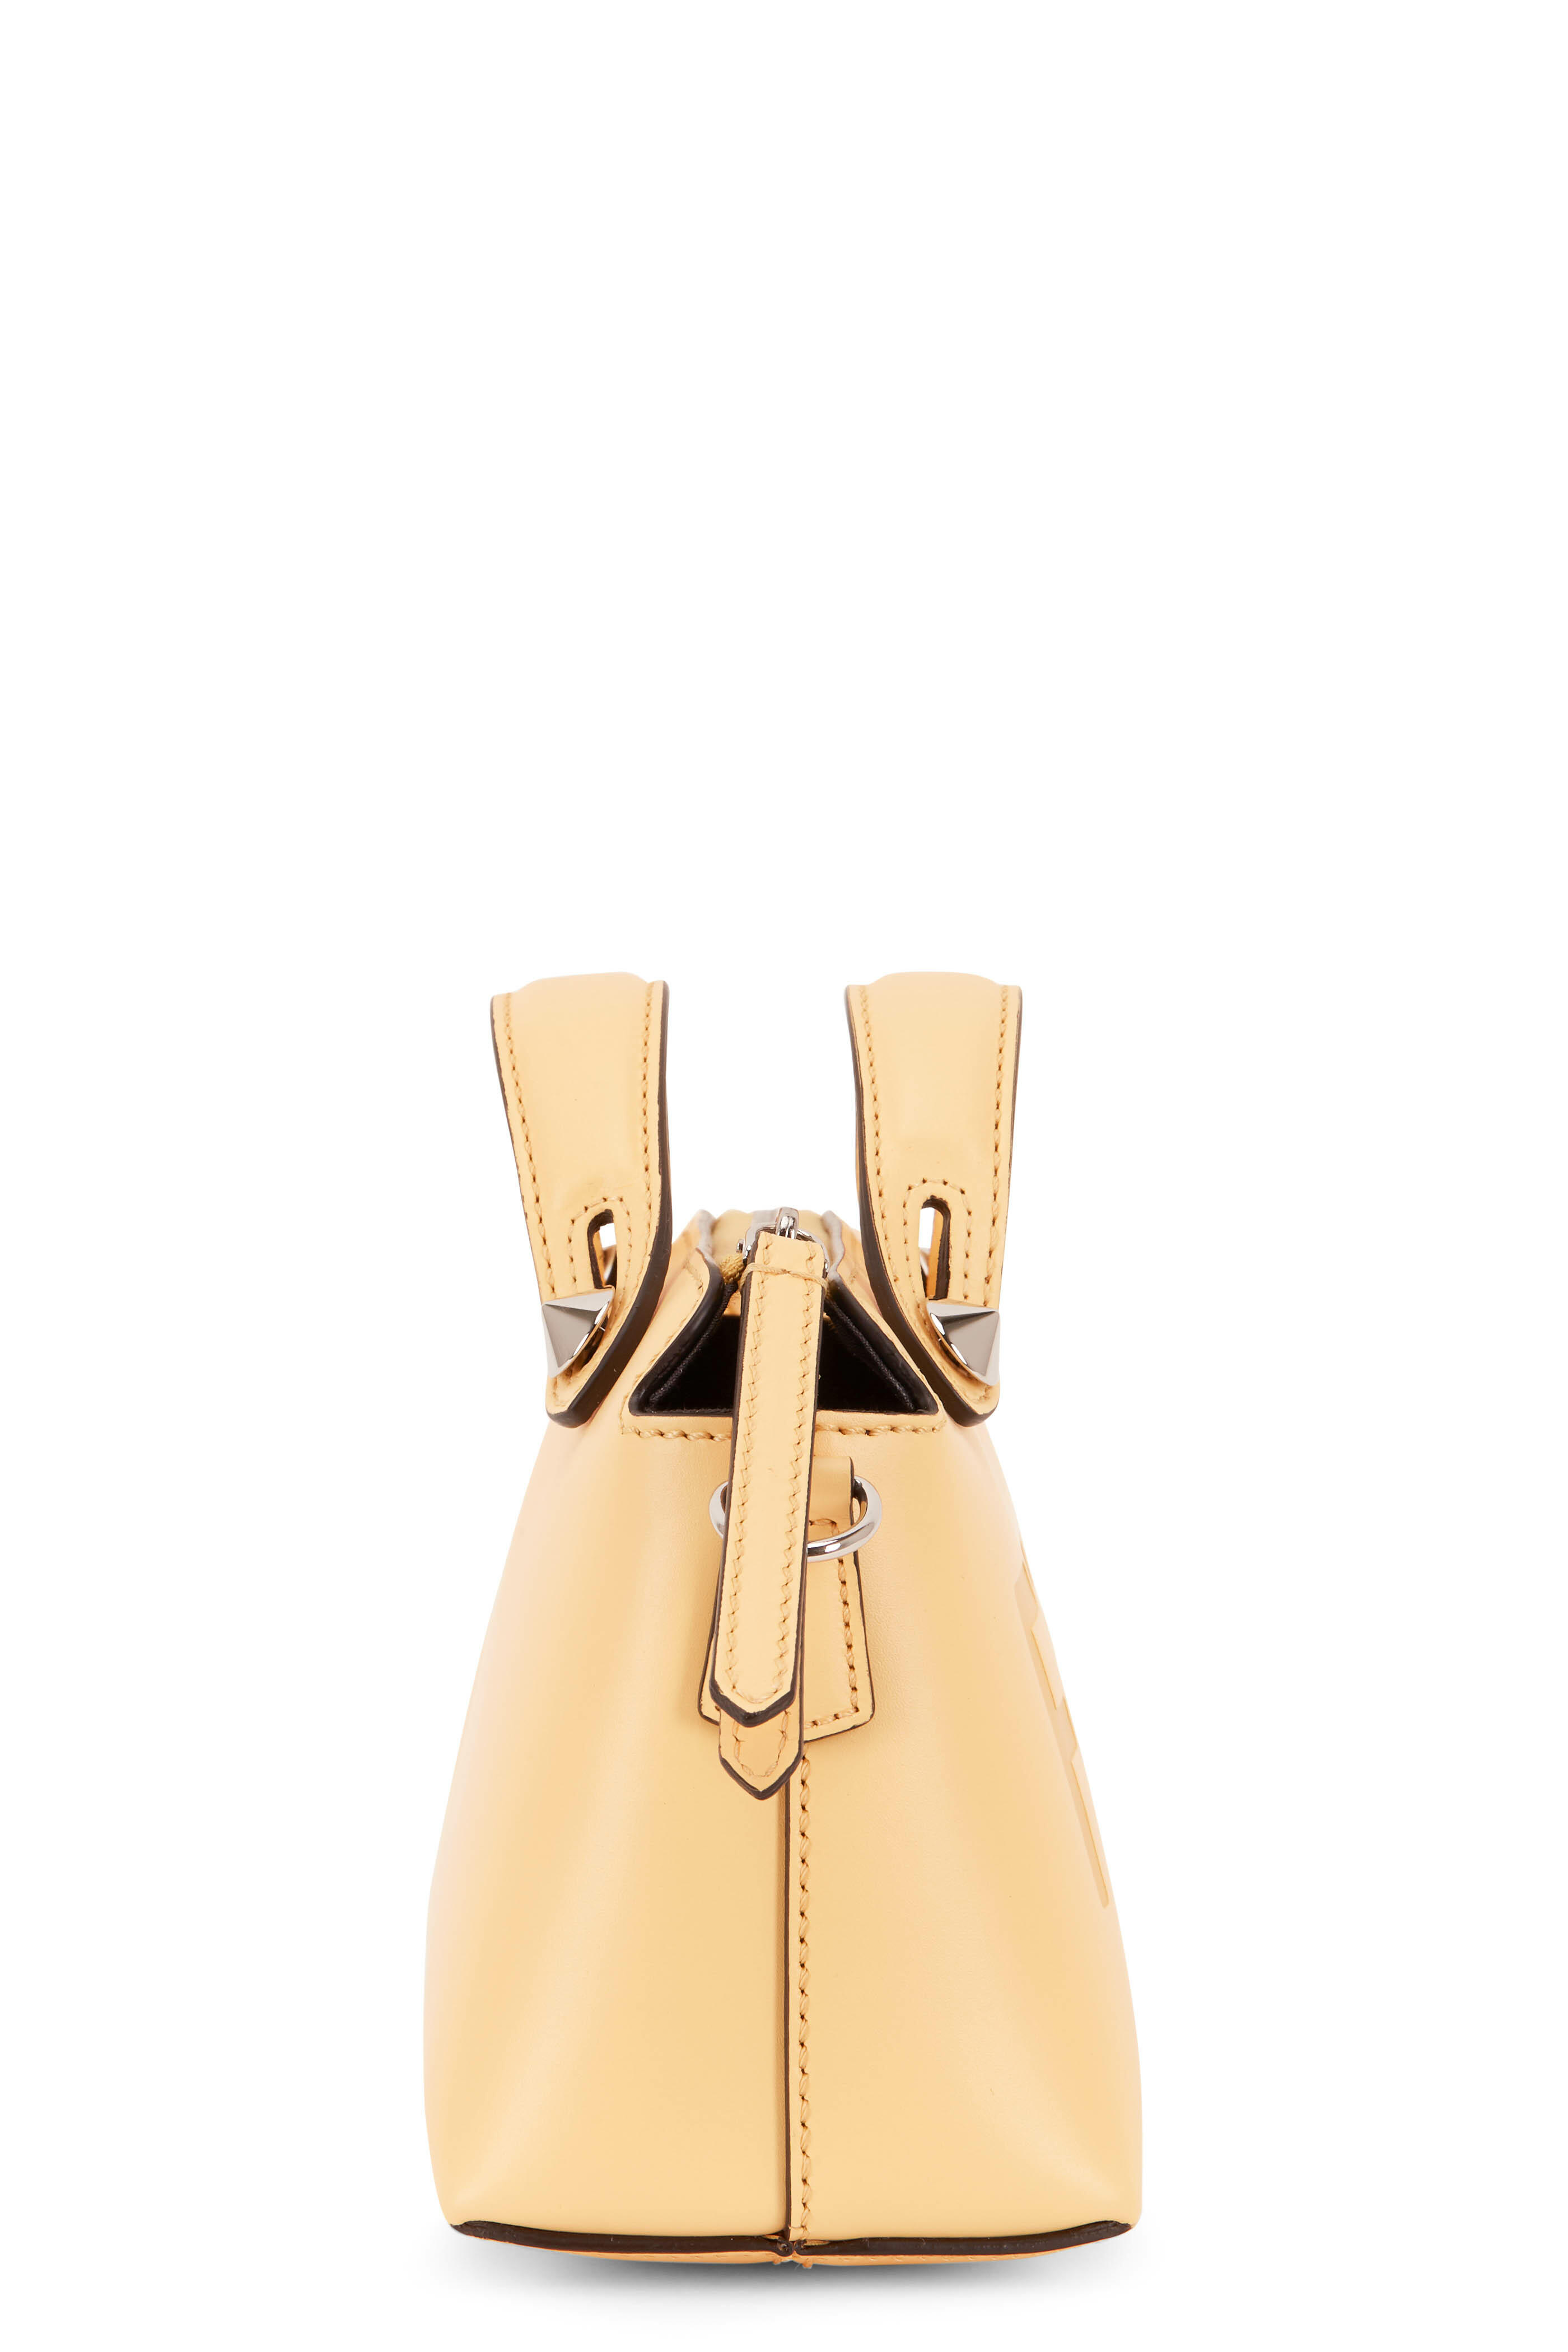 Yellow Designer Top Handle Satchel Leather Bag with Adjustable